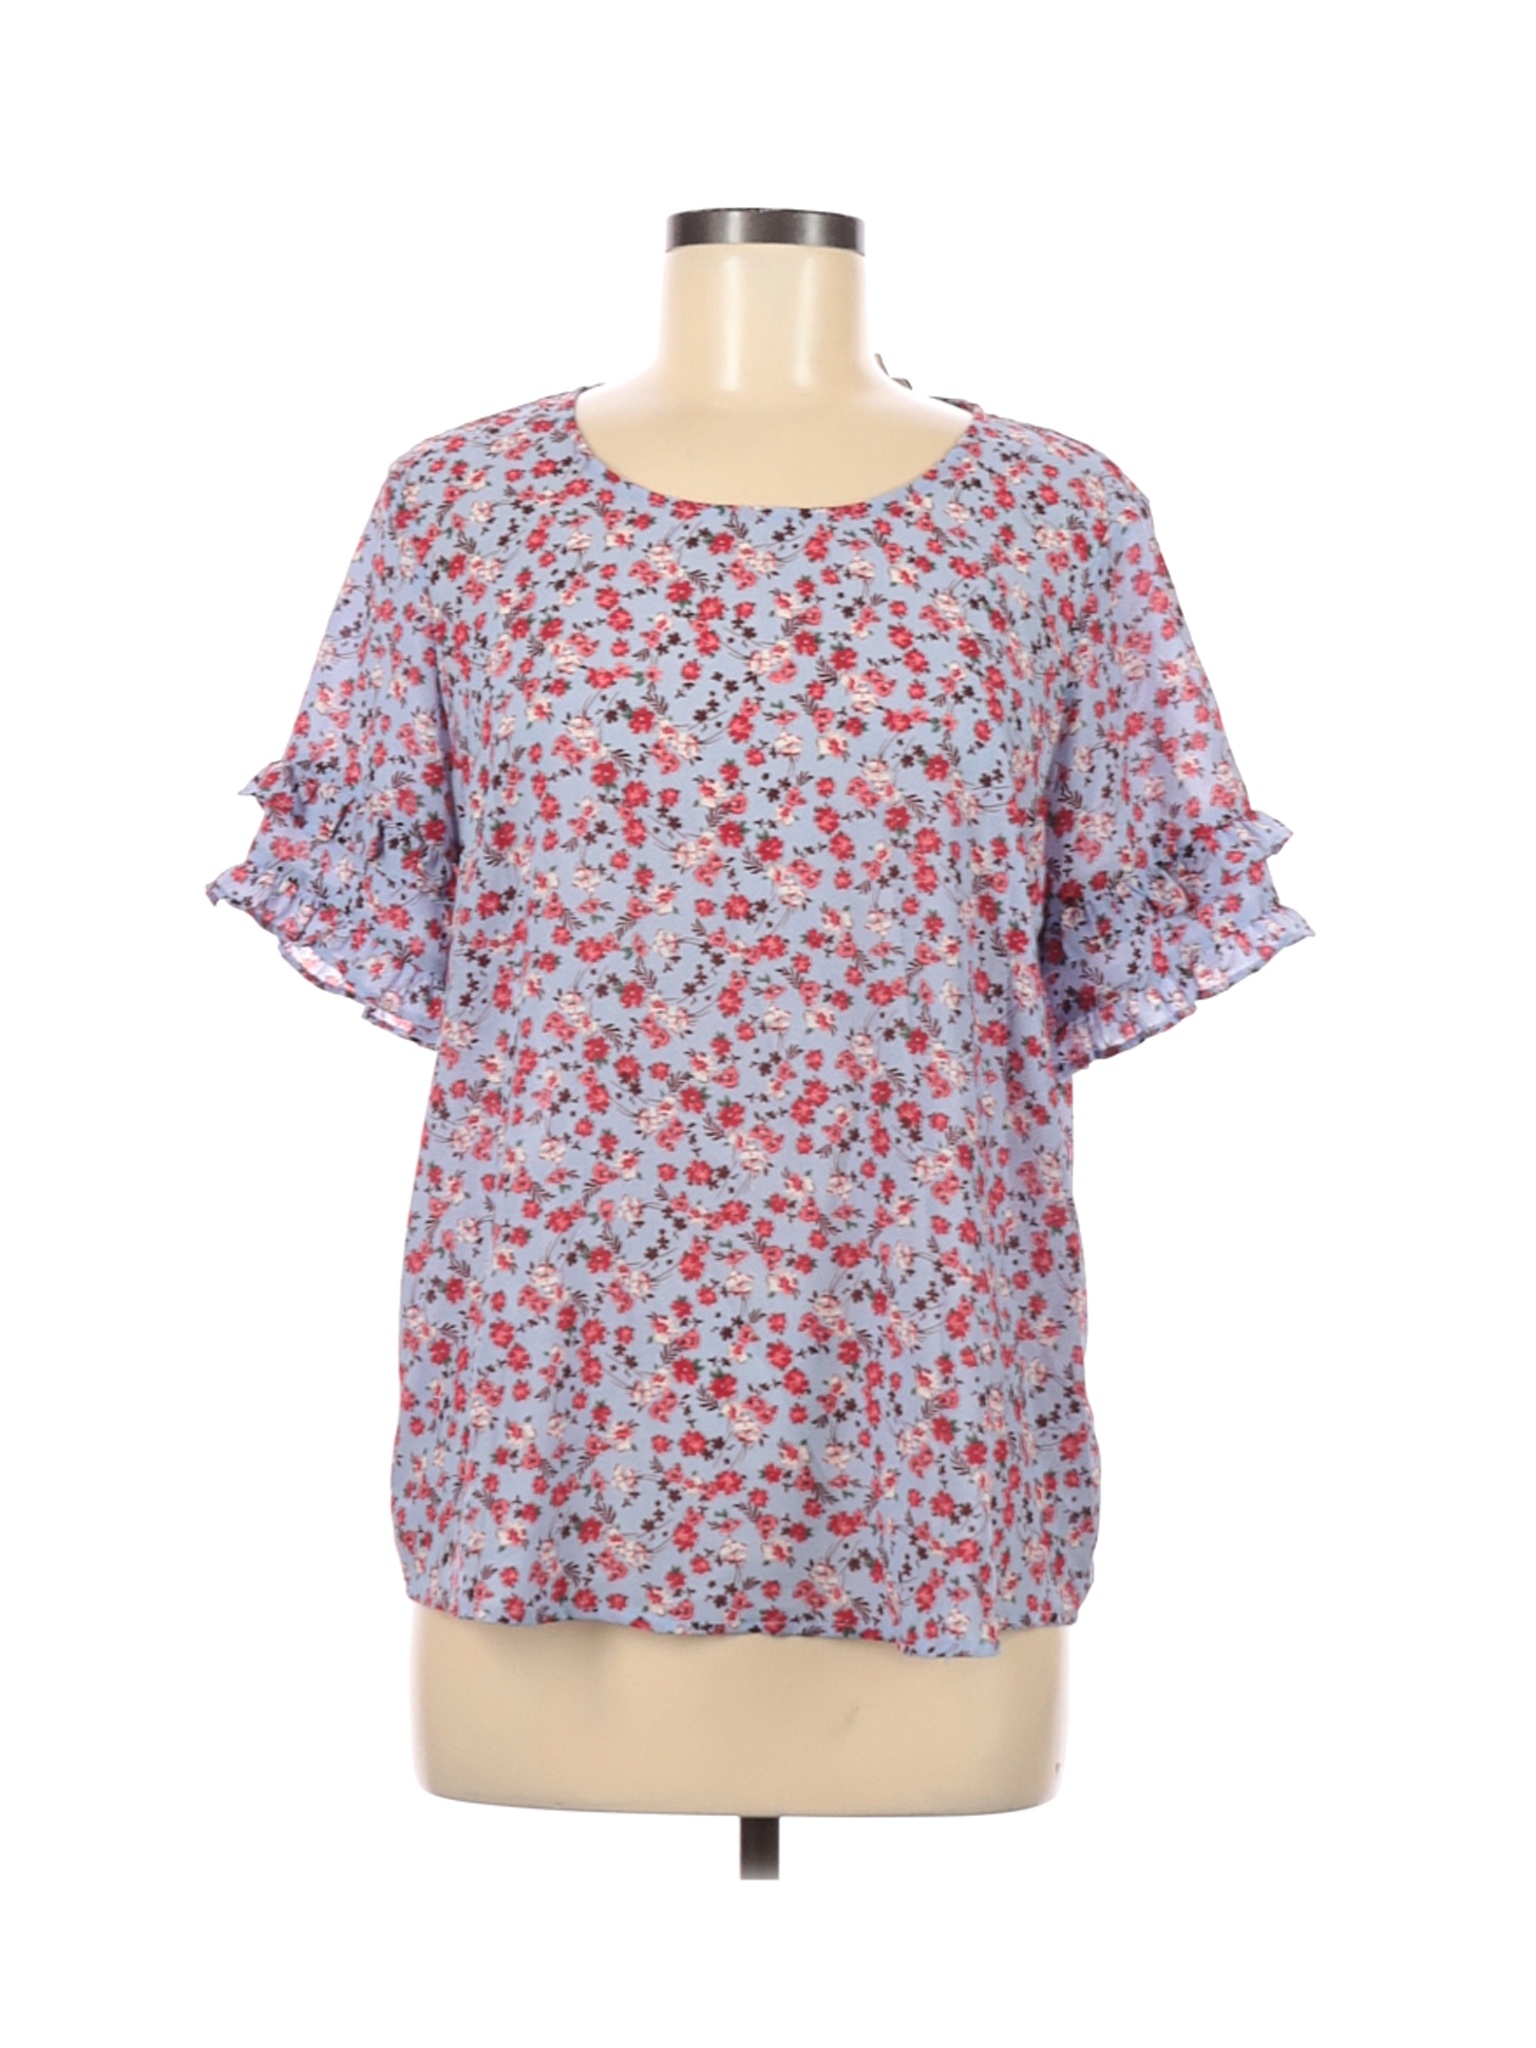 Liz Claiborne Women Purple Short Sleeve Blouse M | eBay